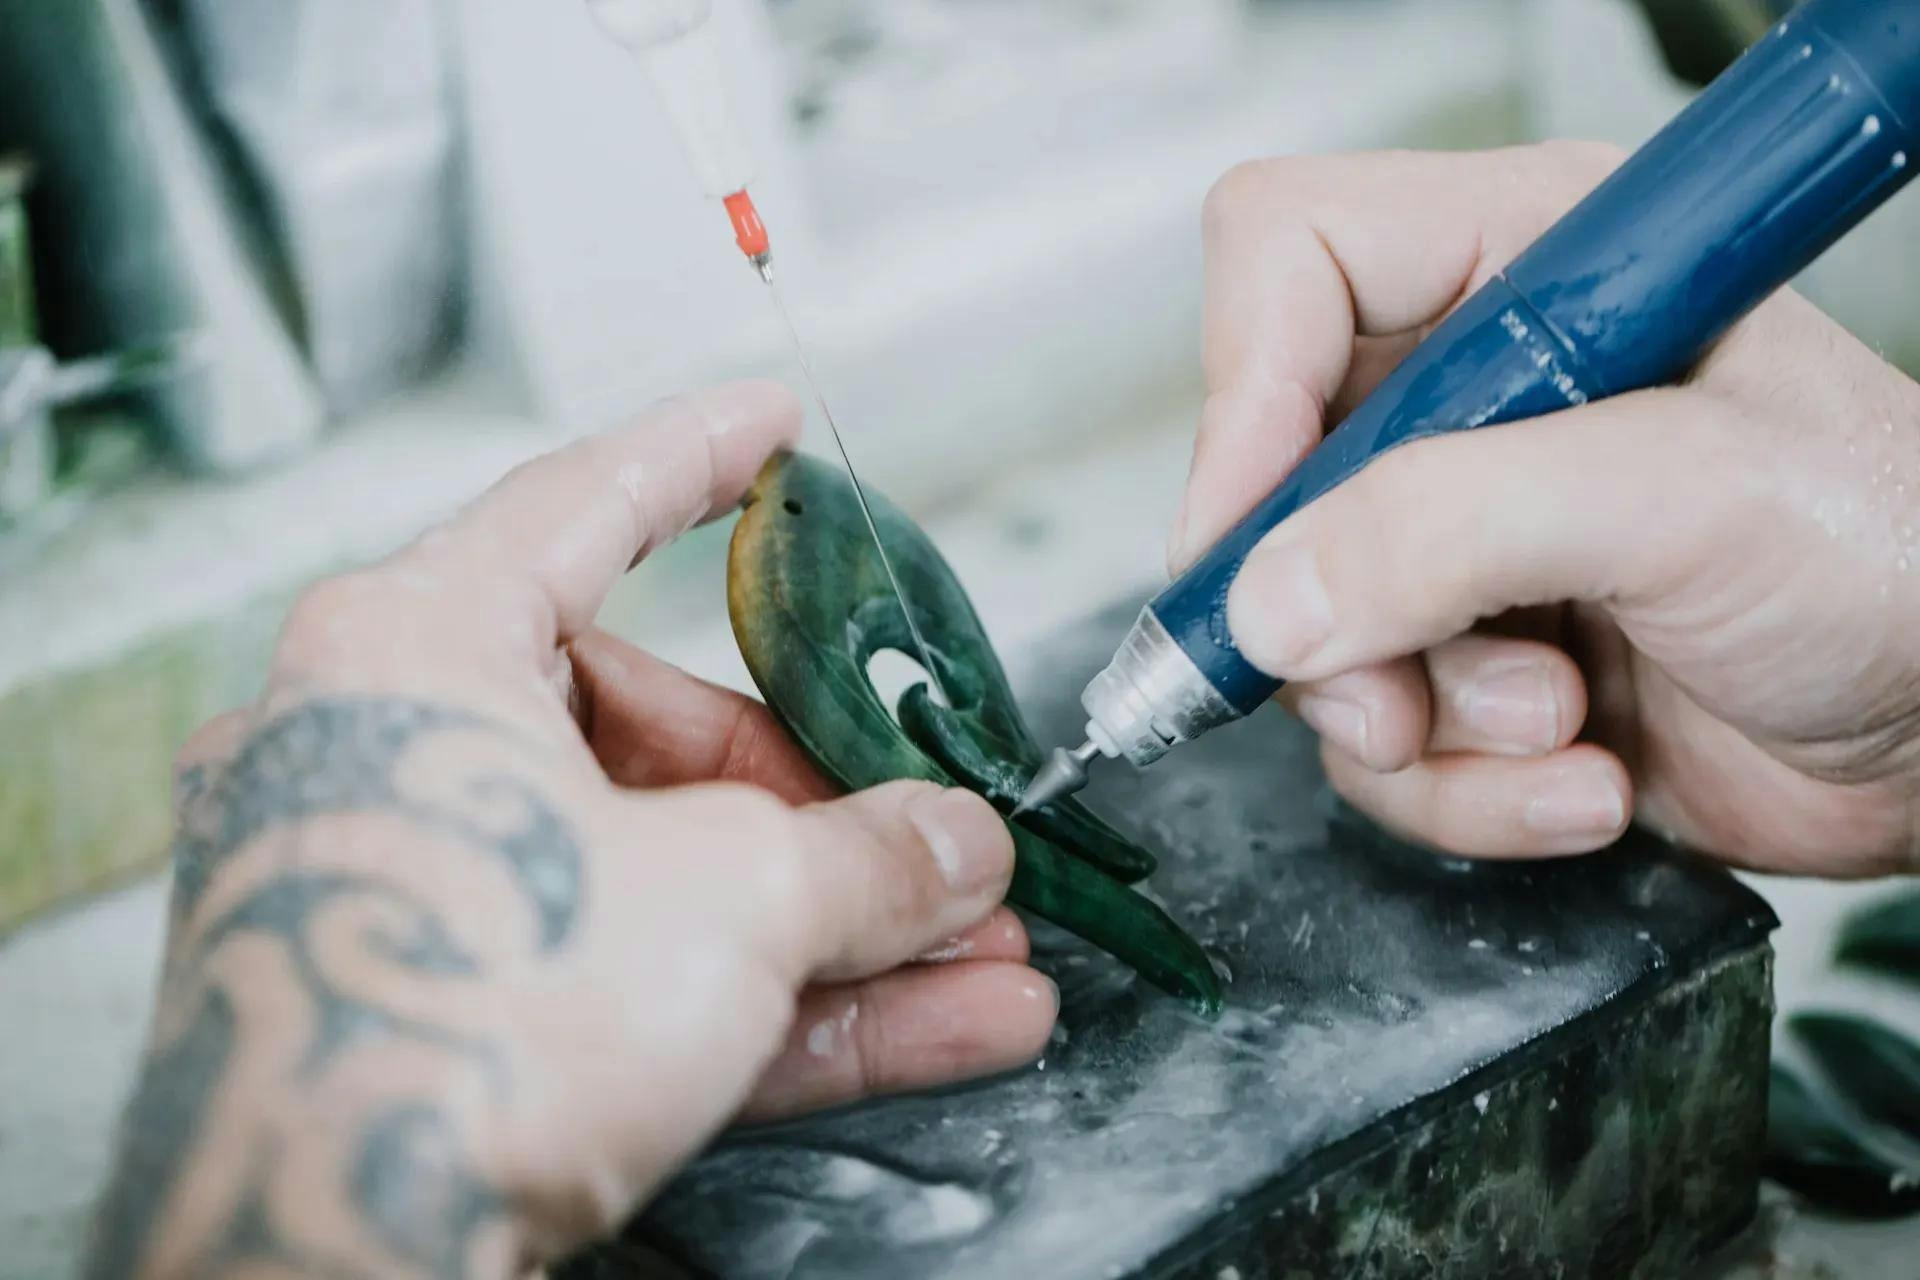 carving details into a jade piece